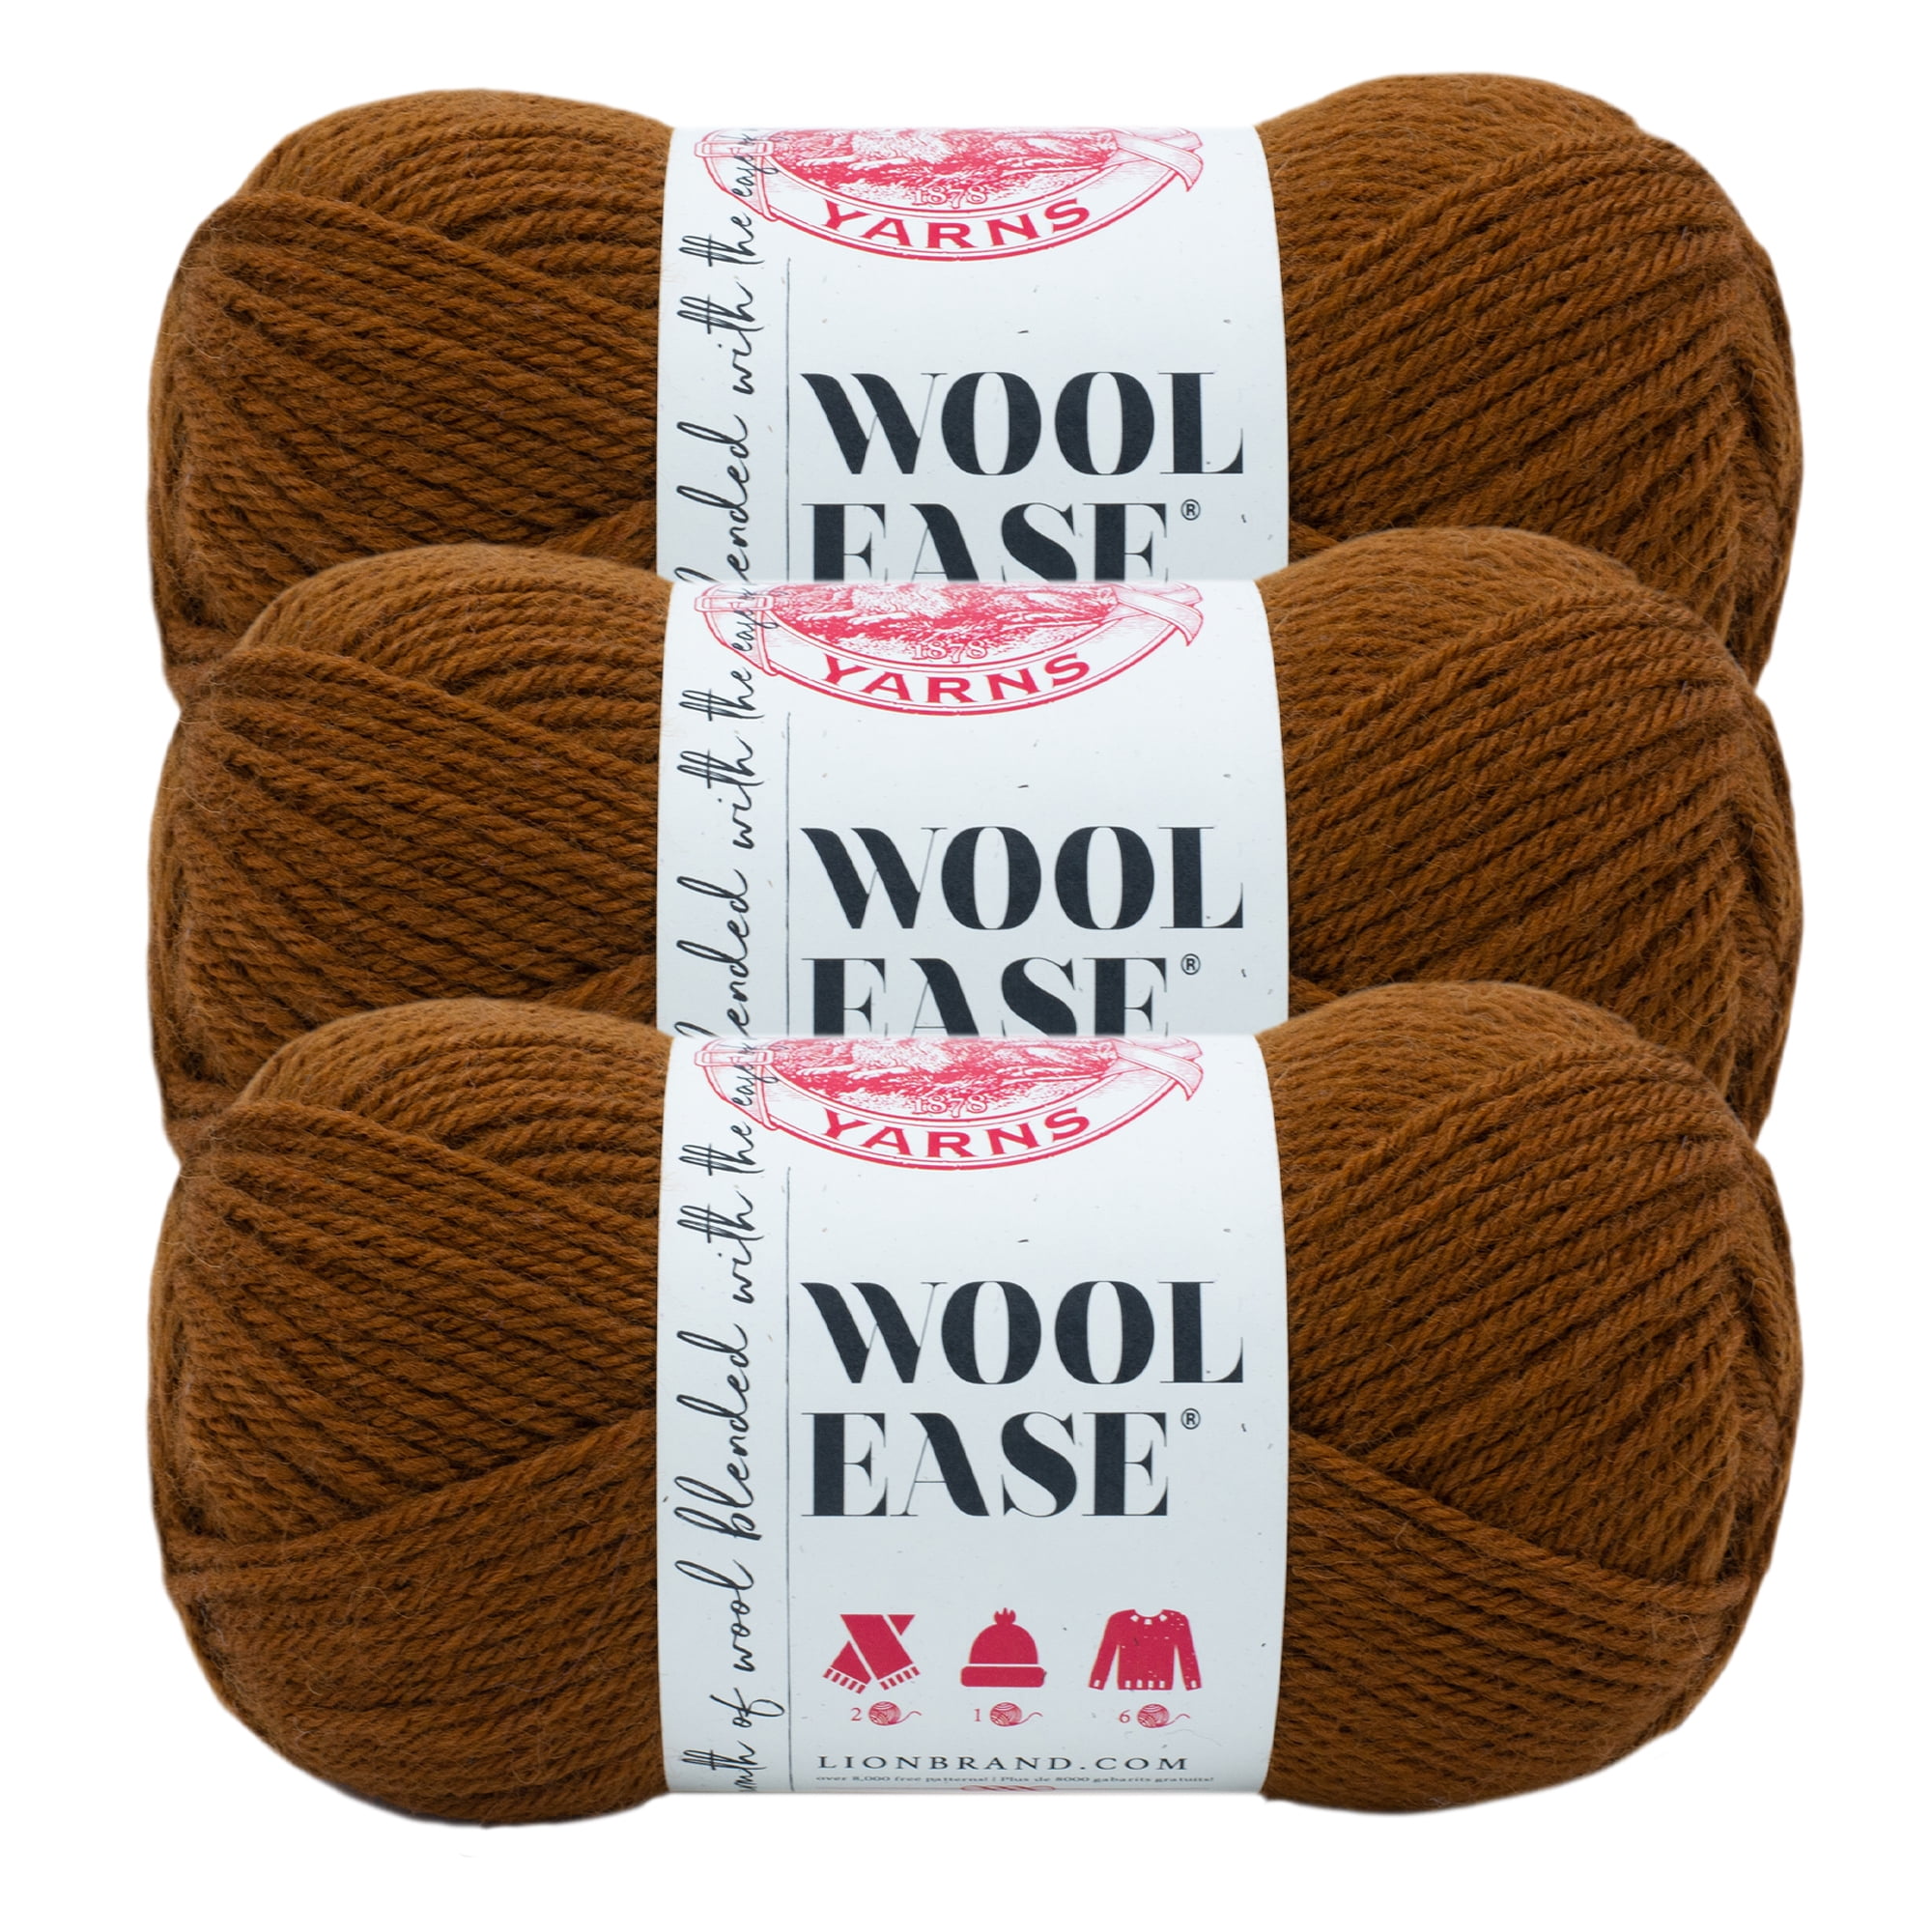 Lion Brand Yarn Wool-Ease Flint Classic Worsted Medium Acrylic, Wool Gray  Yarn 3 Pack 